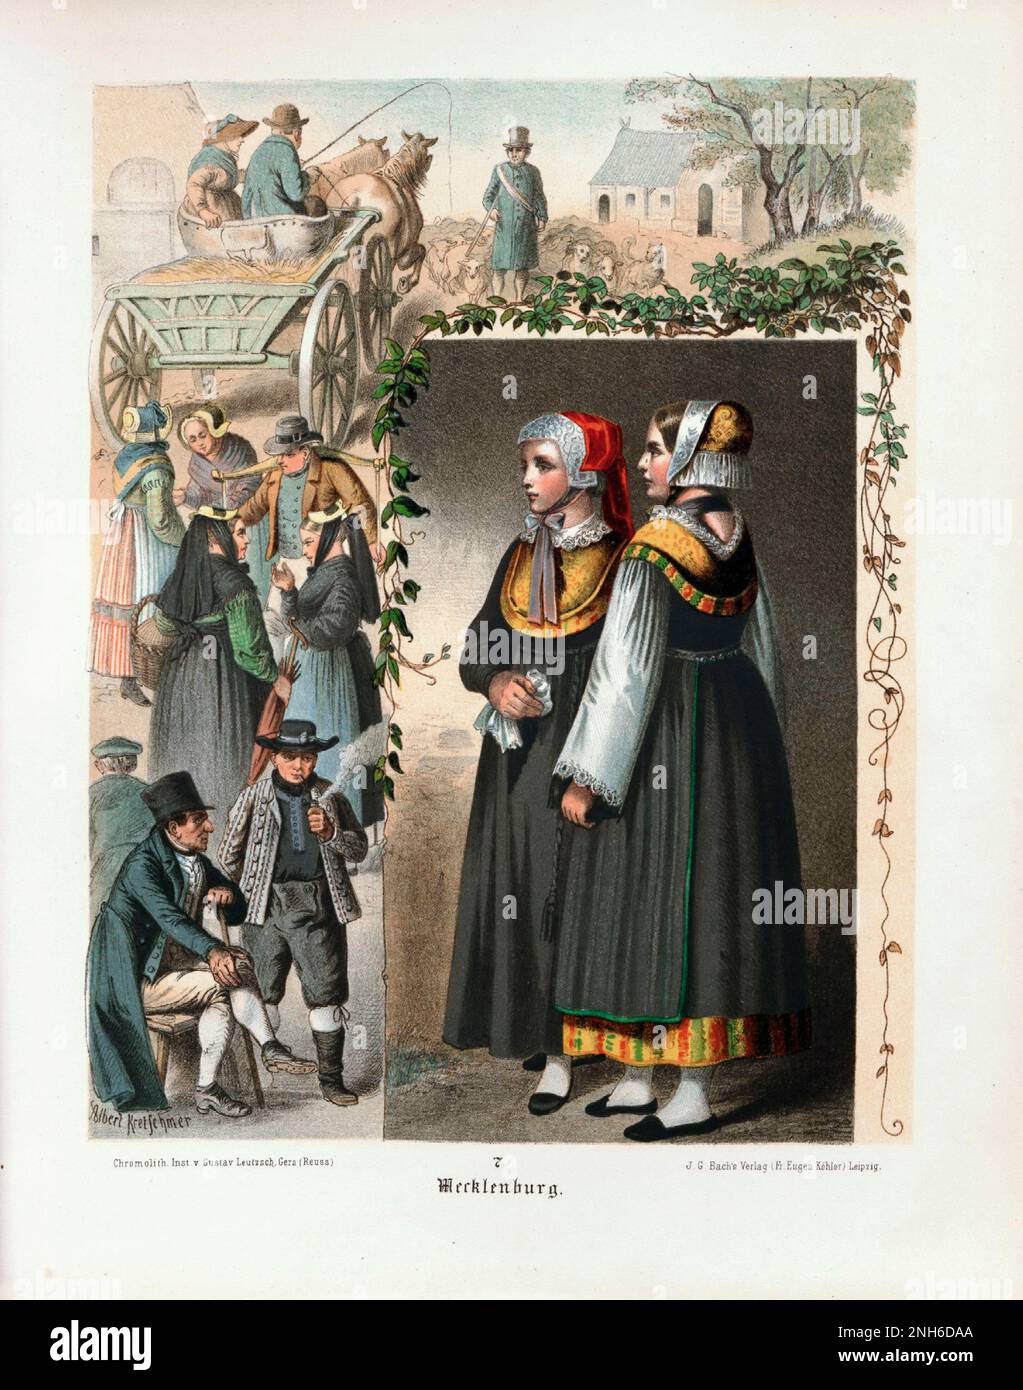 German folk costume. Mecklenburg. 19th-century lithography. Stock Photo